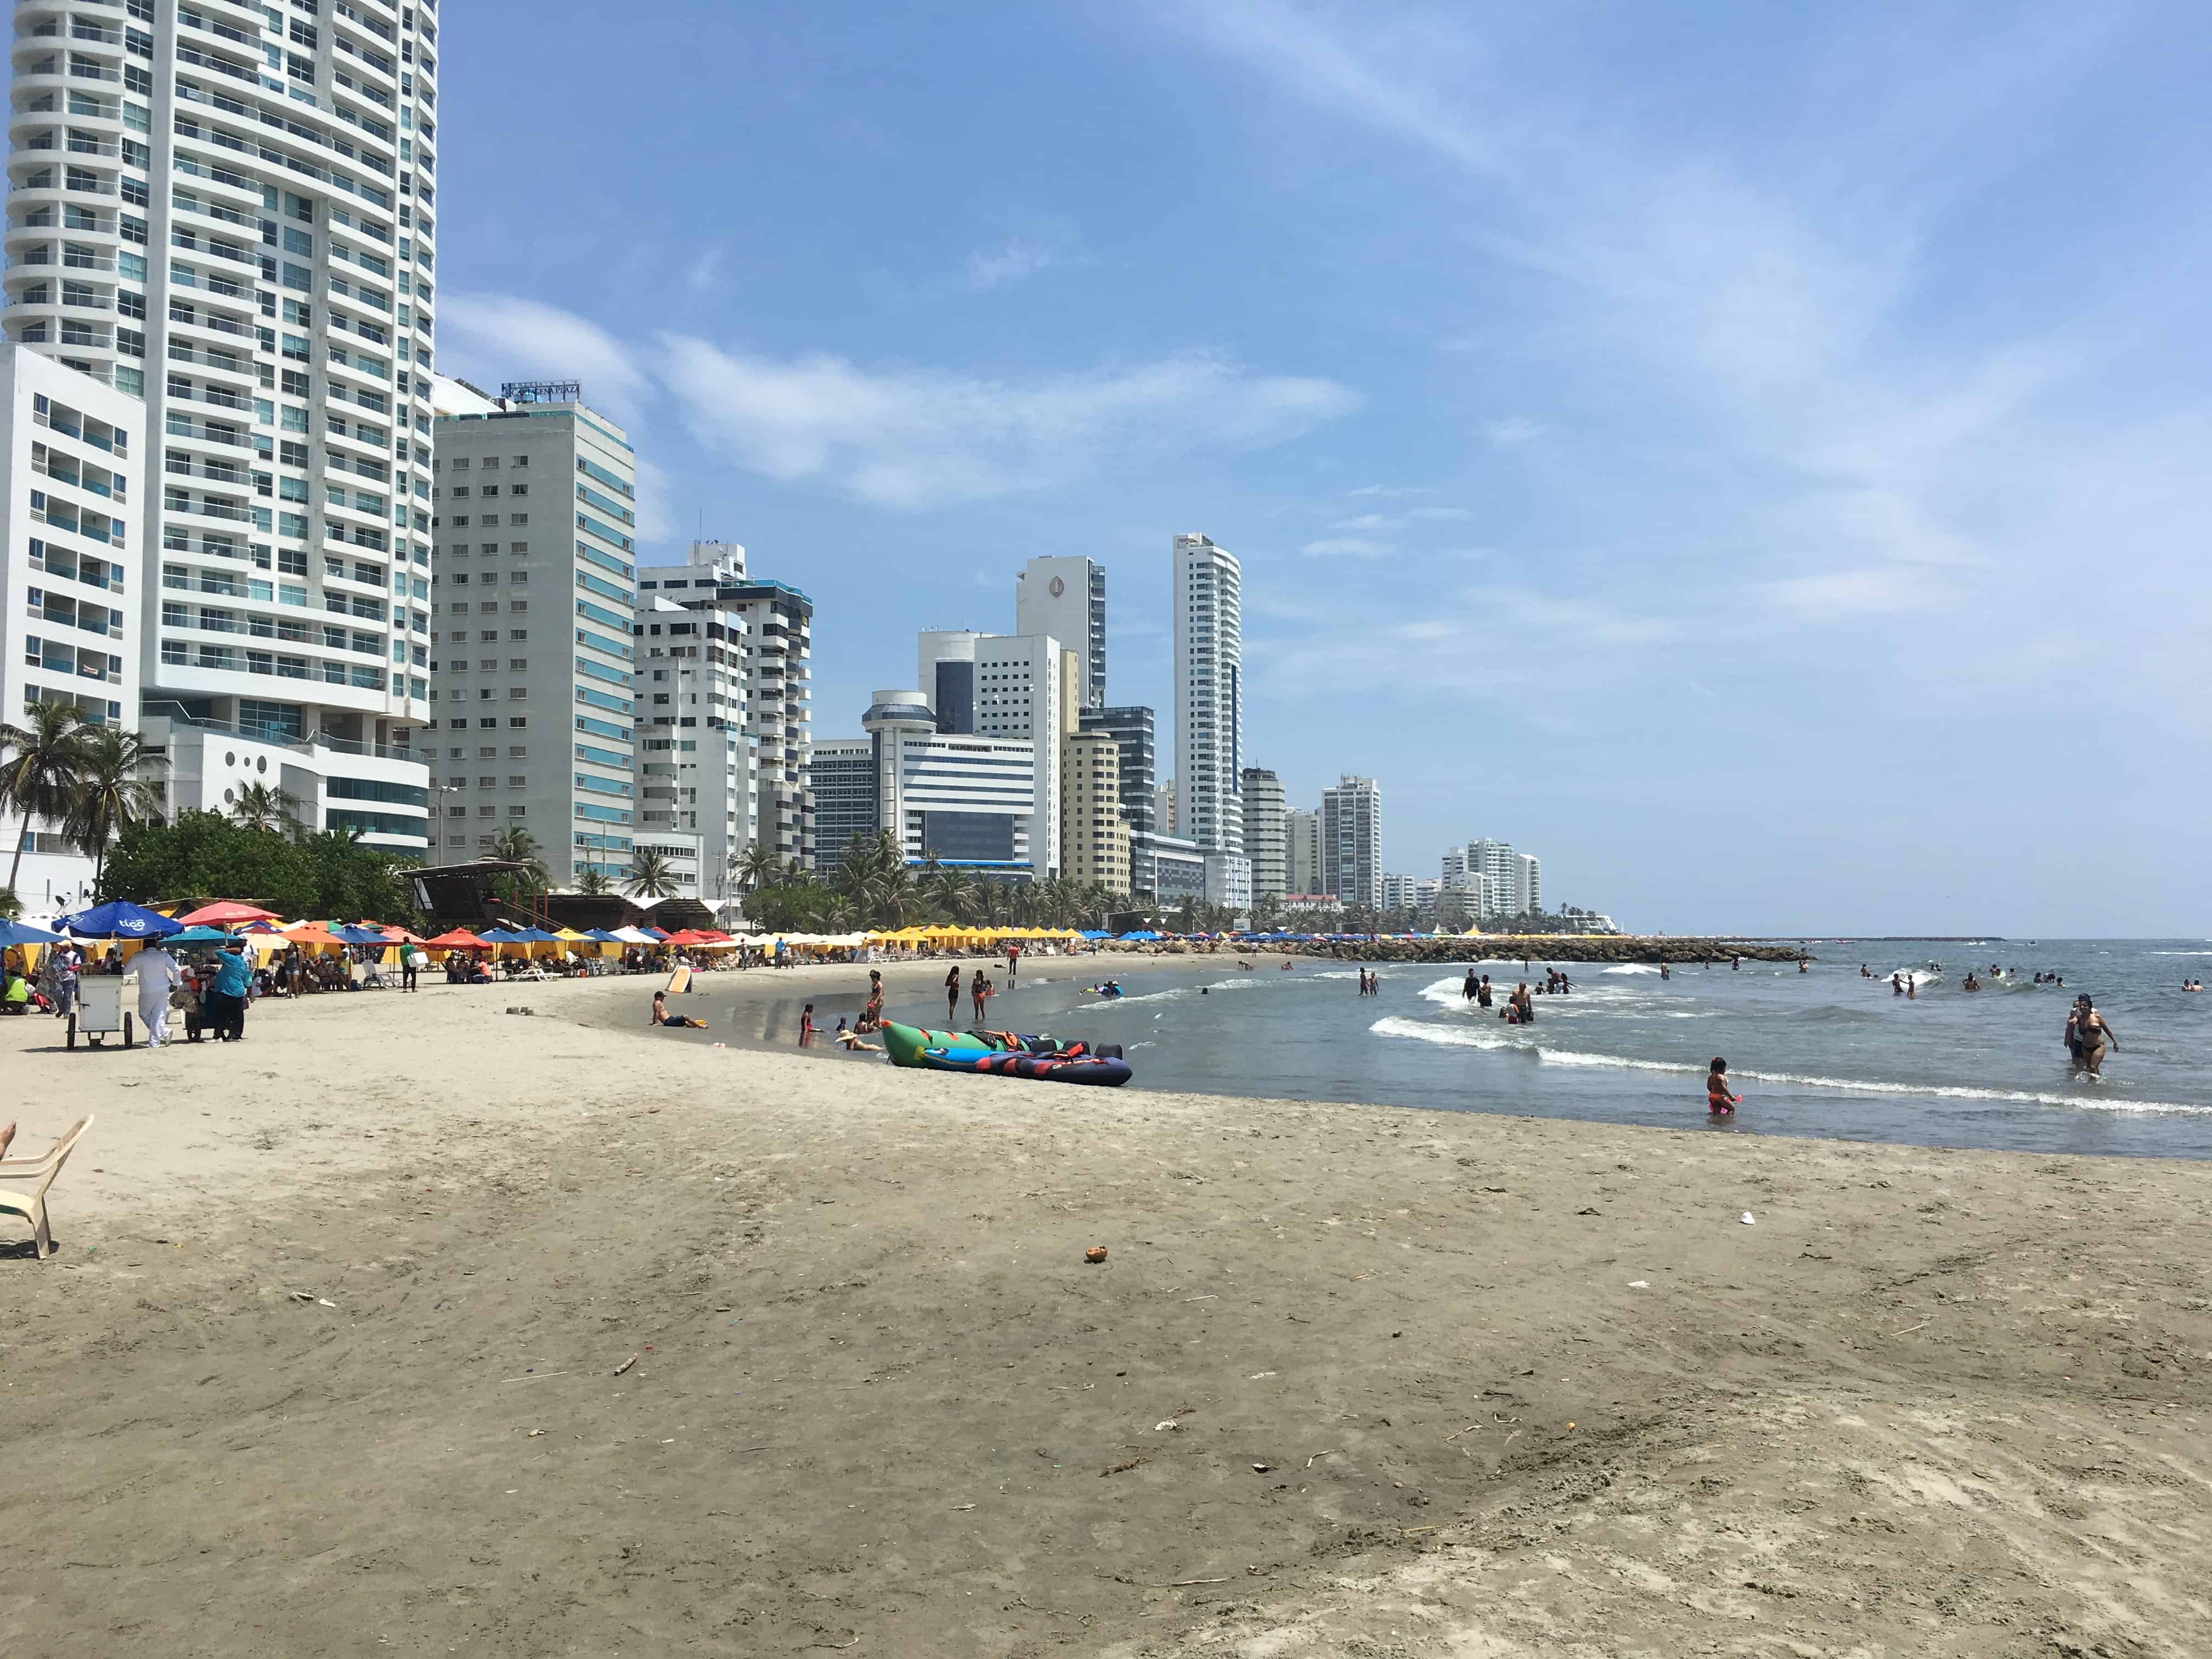 The beach at Bocagrande, Cartagena, Colombia